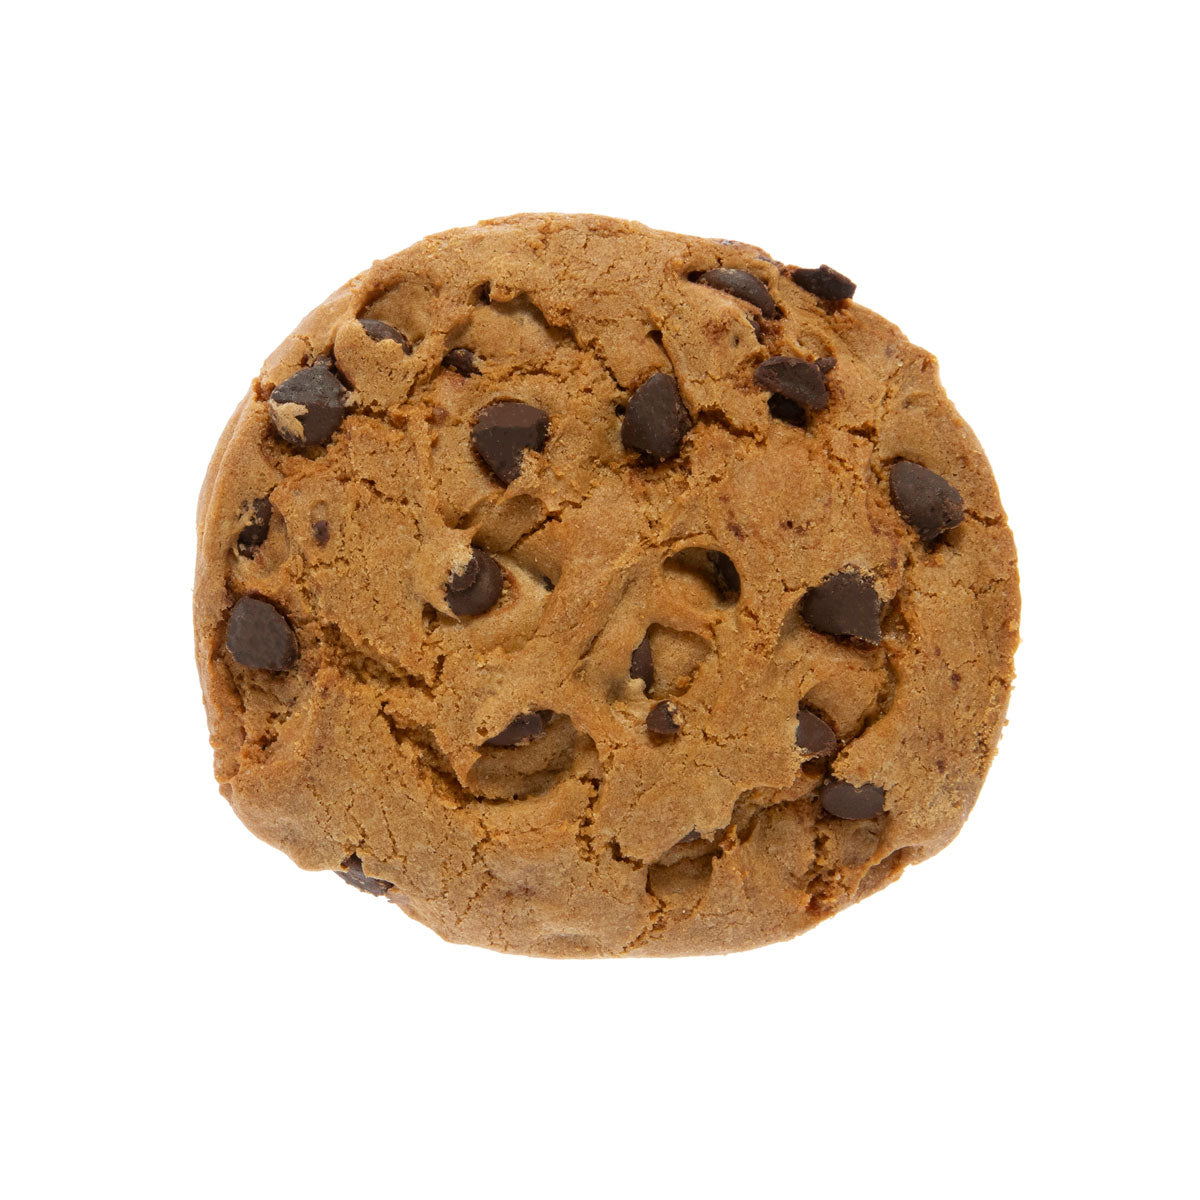 David'S Cookies Gluten-Free Baked Chocolate Chip Cookies 3 OZ